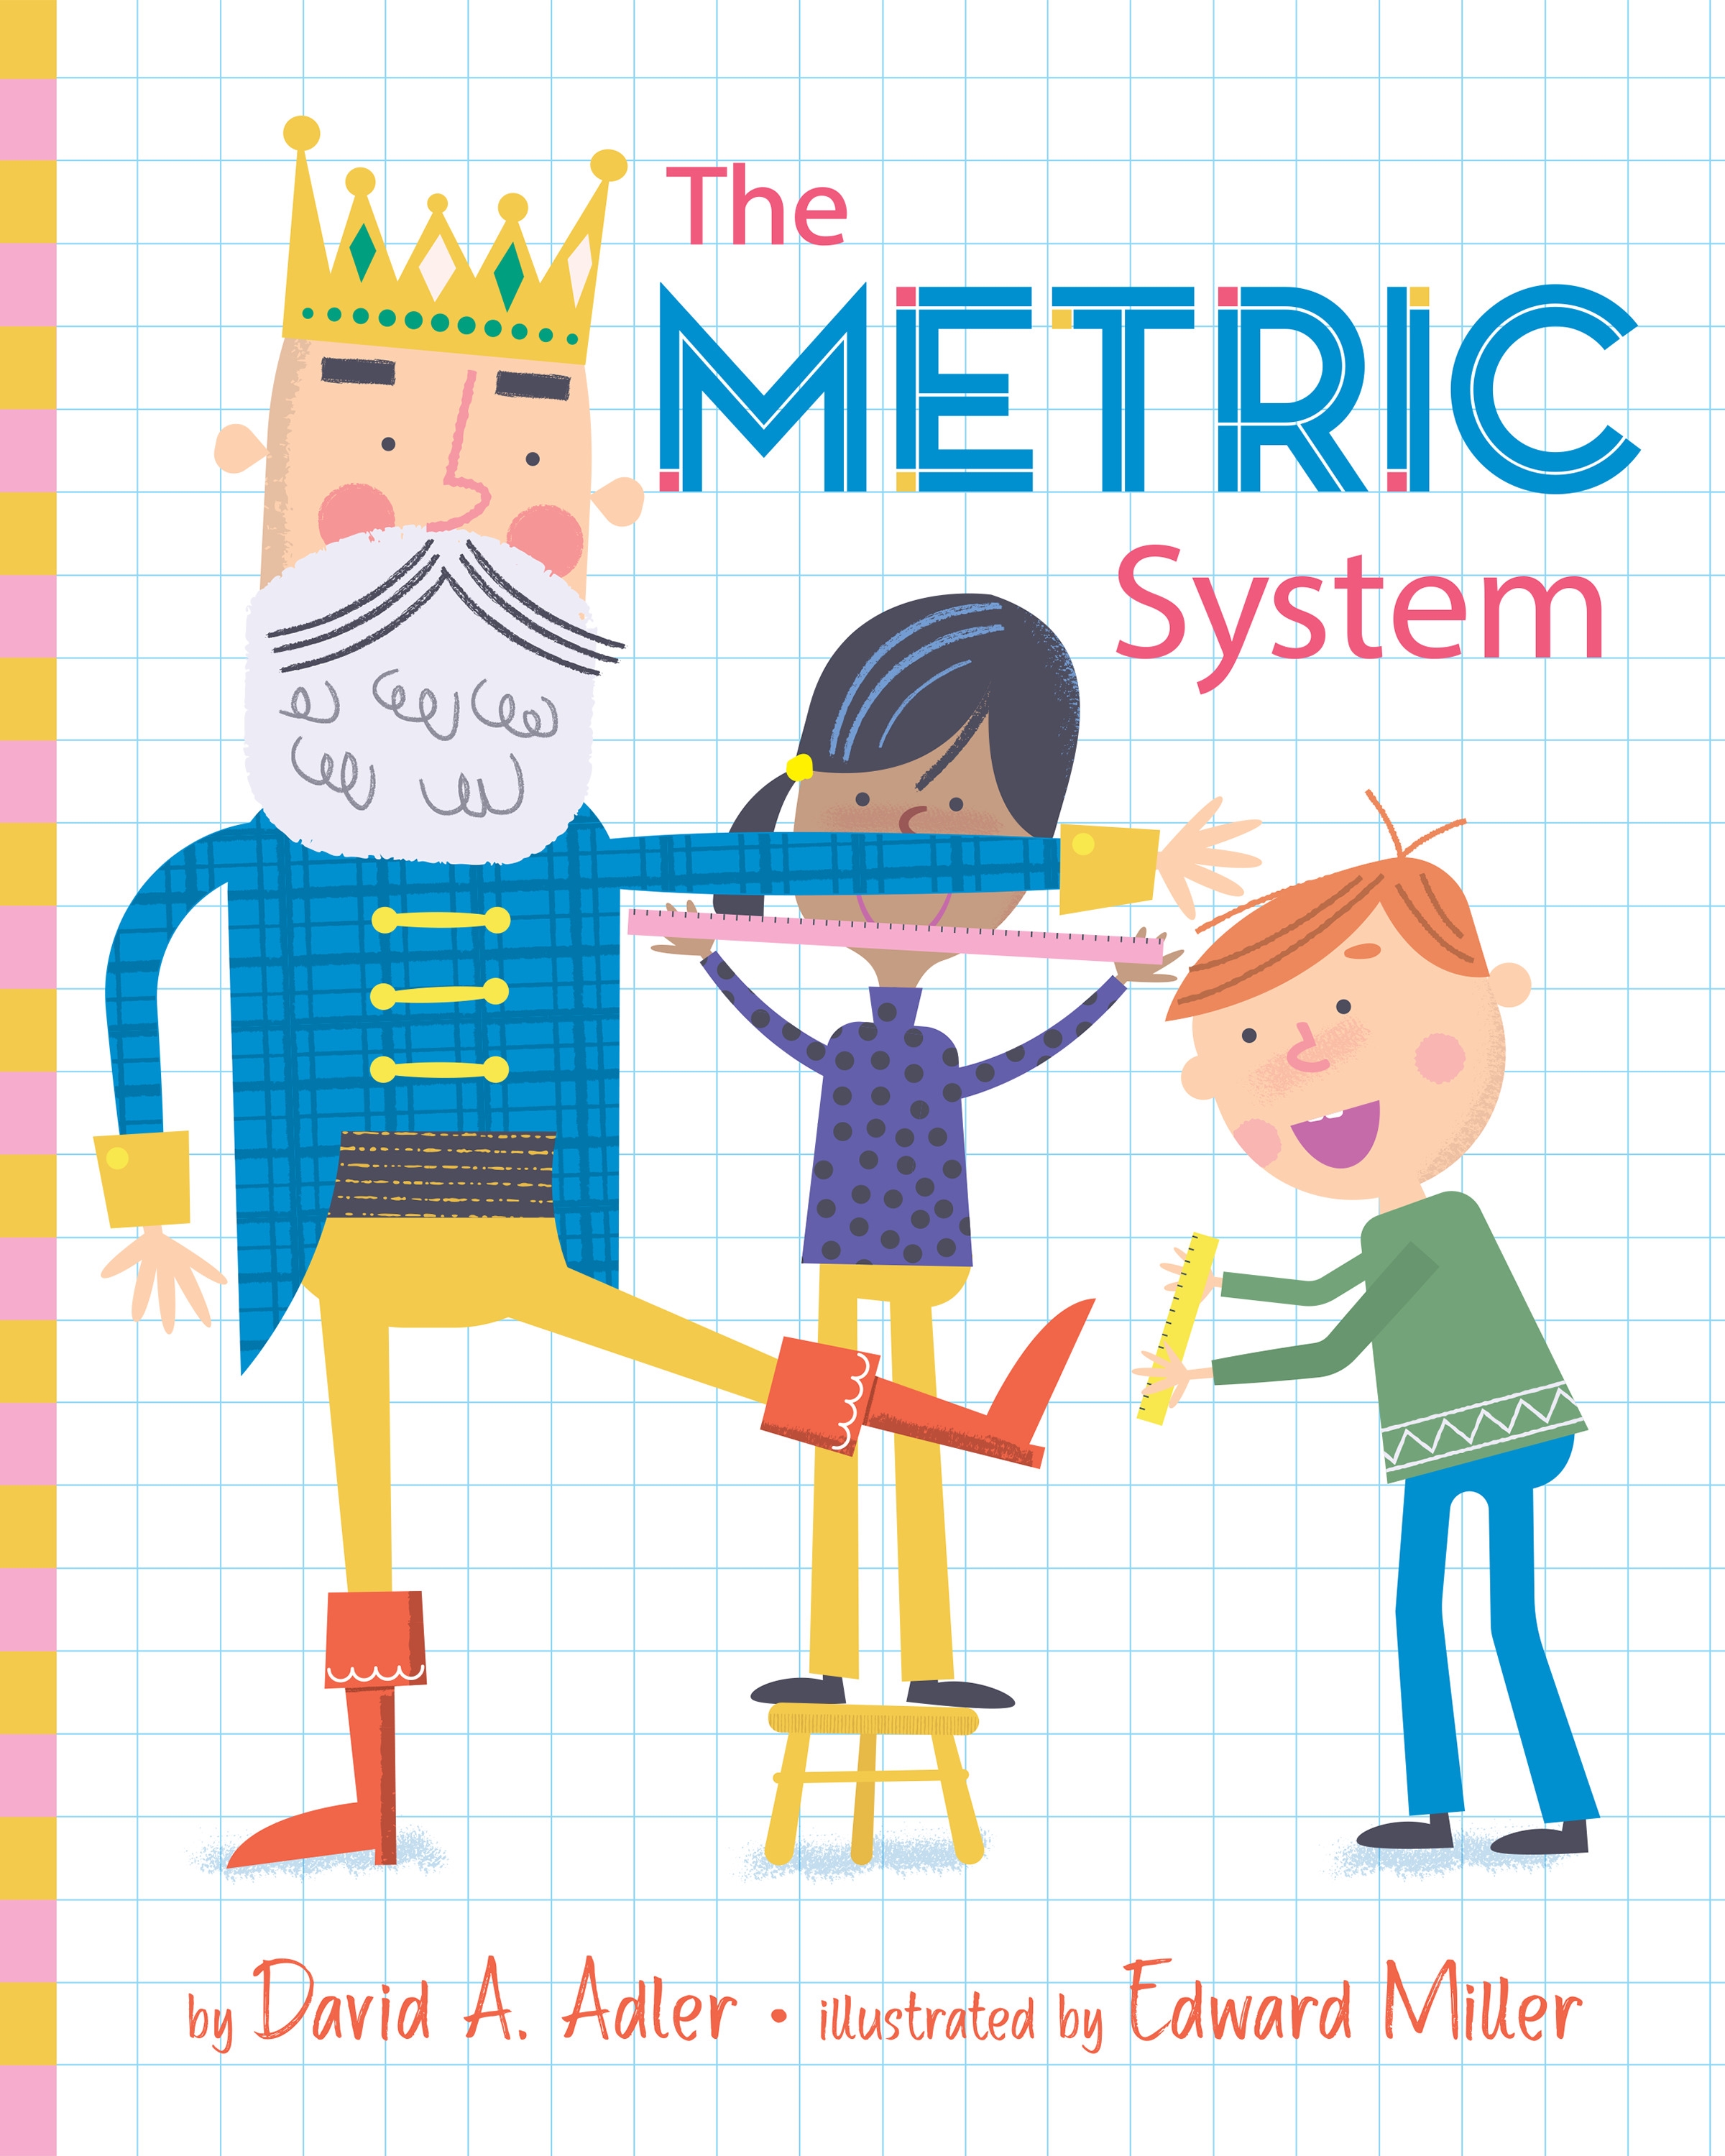 the-metric-system-by-david-a-adler-penguin-books-australia